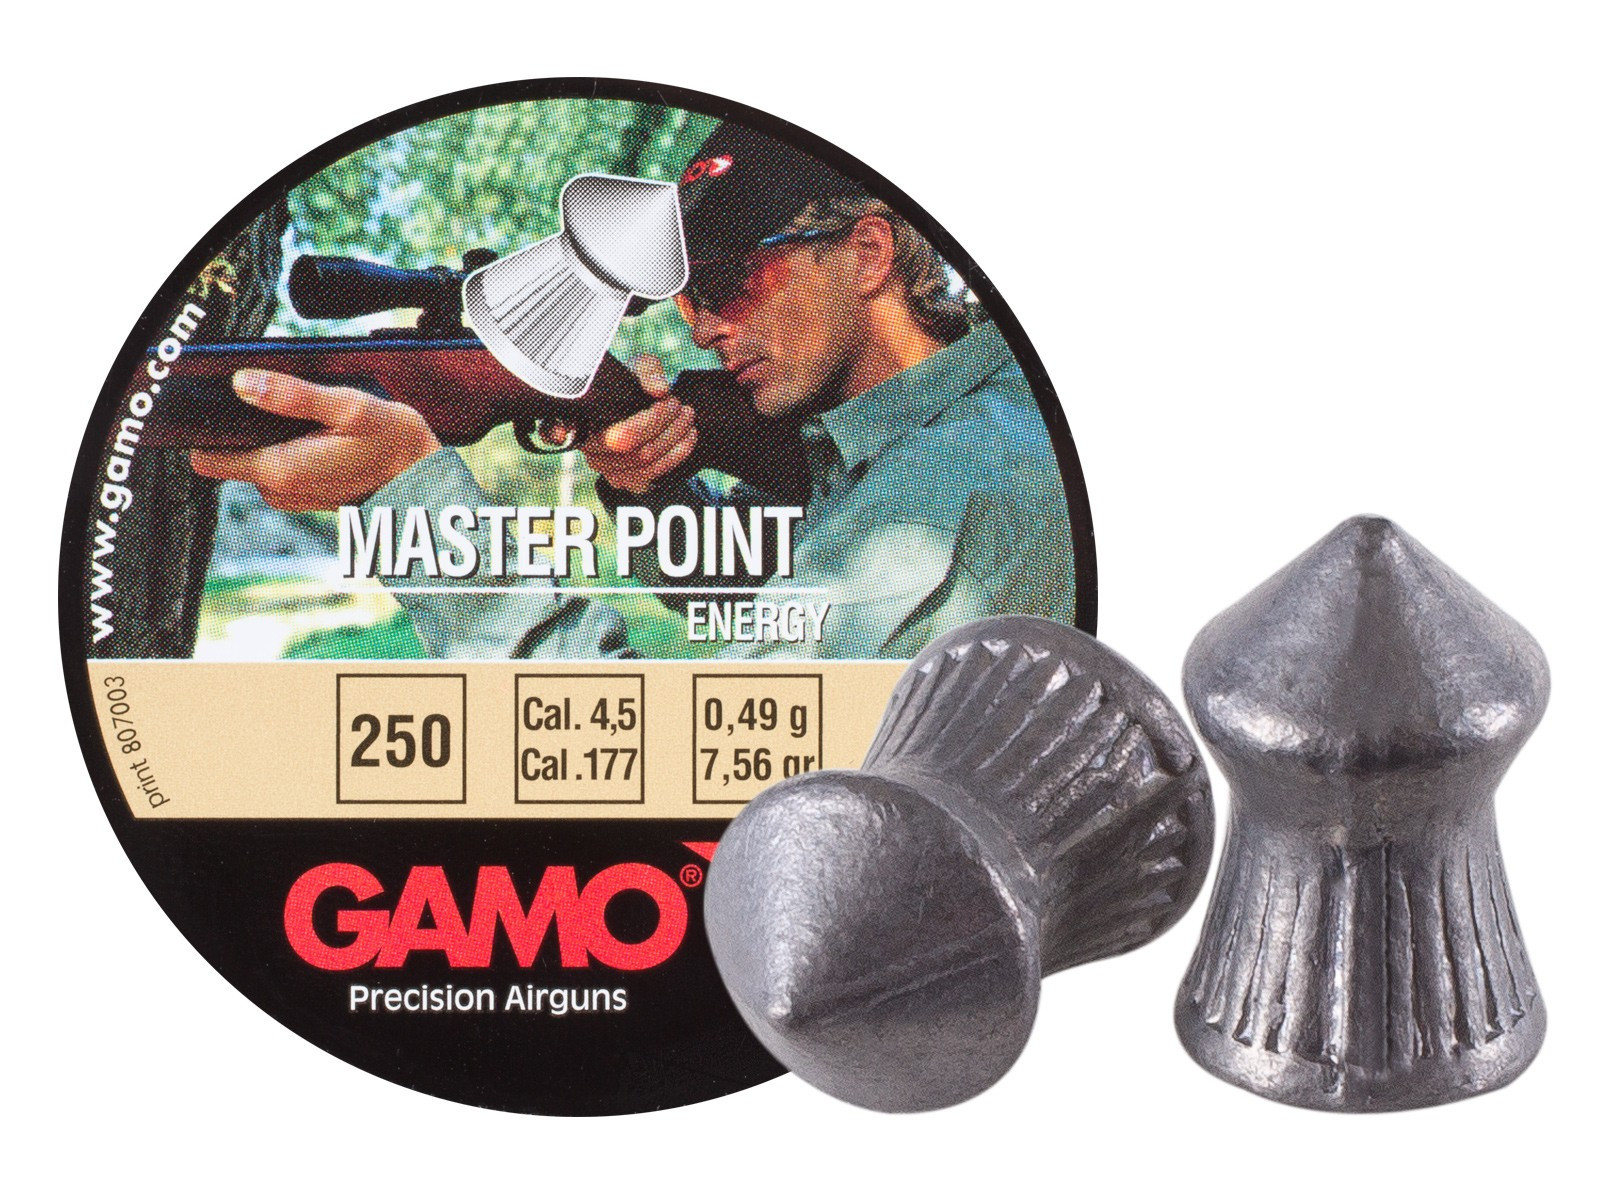 Details about   Gamo Master Point .177 Caliber 7.56 Grain Pellets 250 Count New 